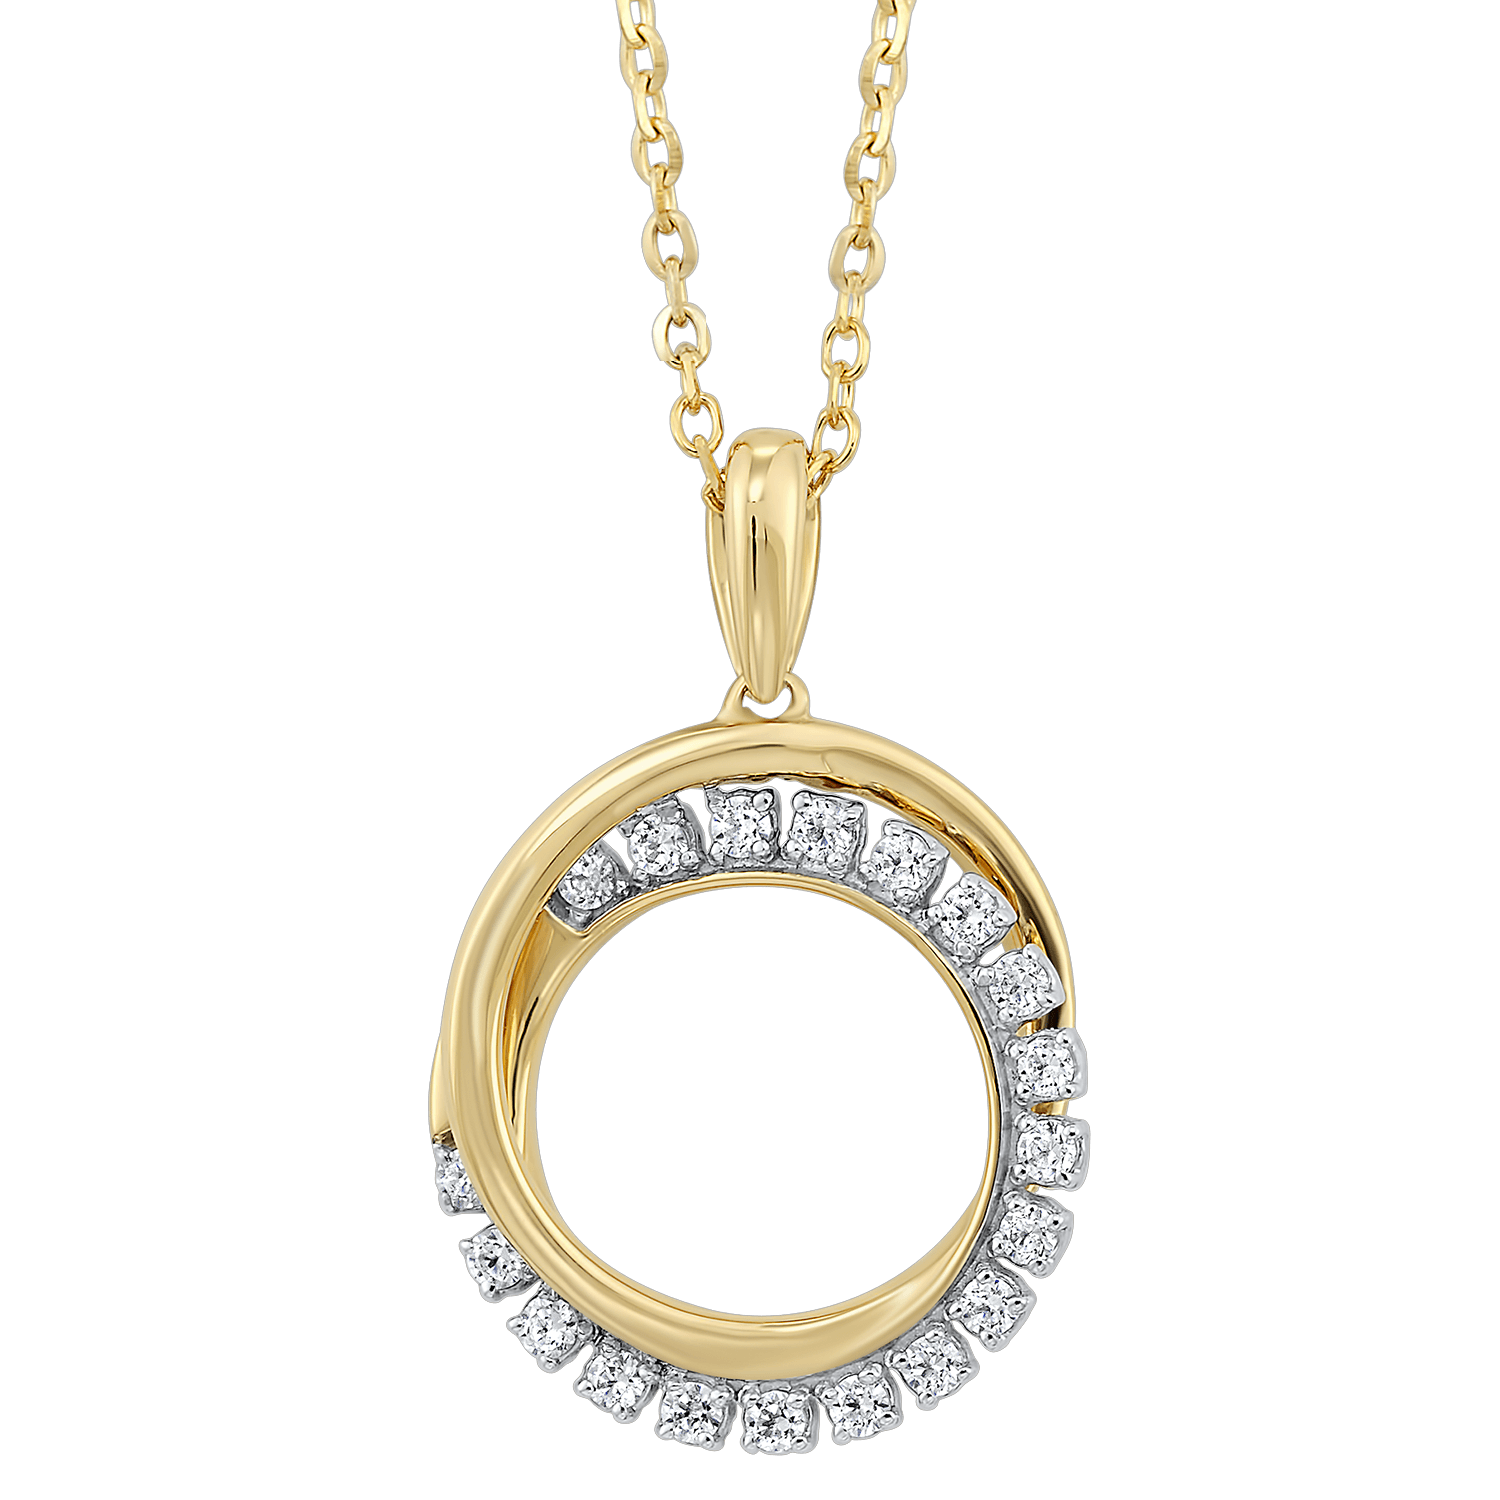 BW James Jewelers Pendant 16 Page Christmas Catalog Offer Gold Diamond Pendant 1/10ctw